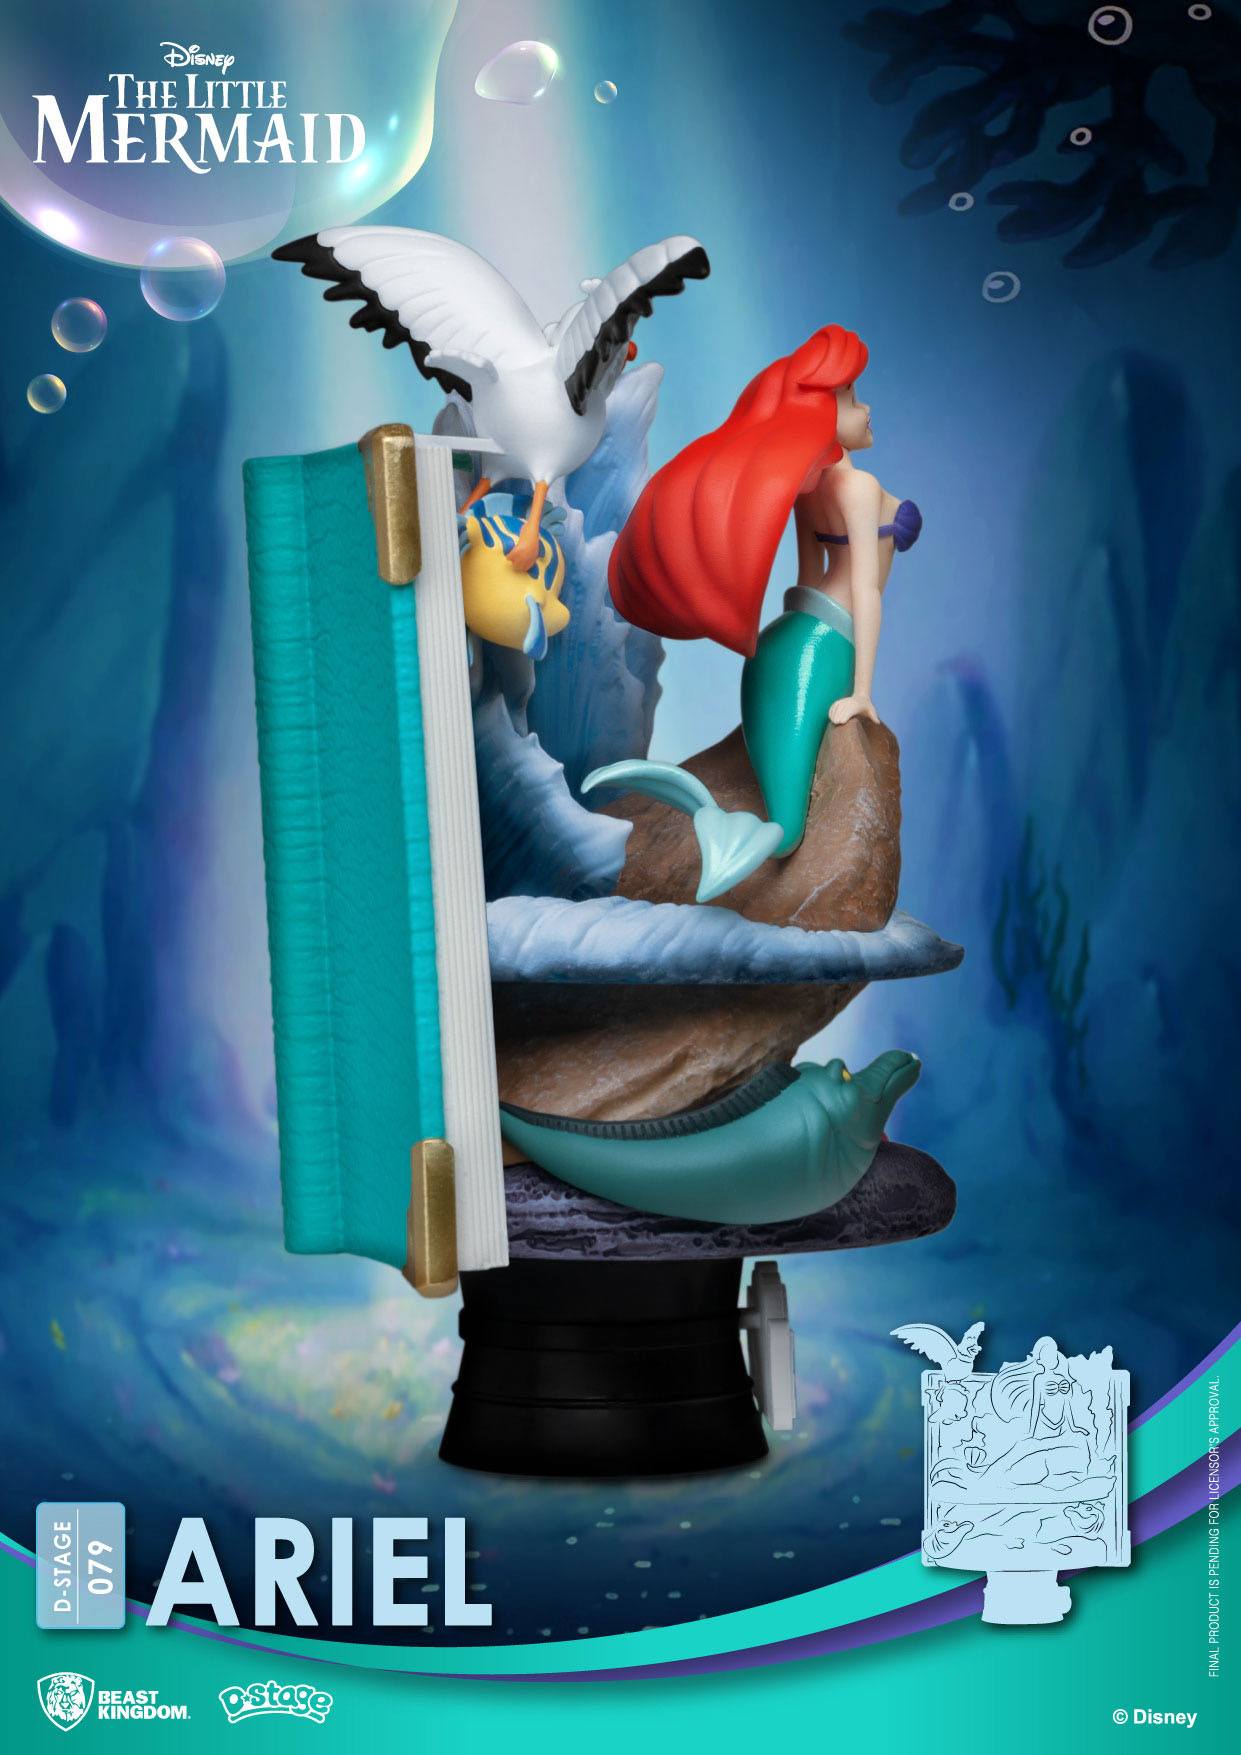 Diorama D-Stage Blok Book Series Ariel